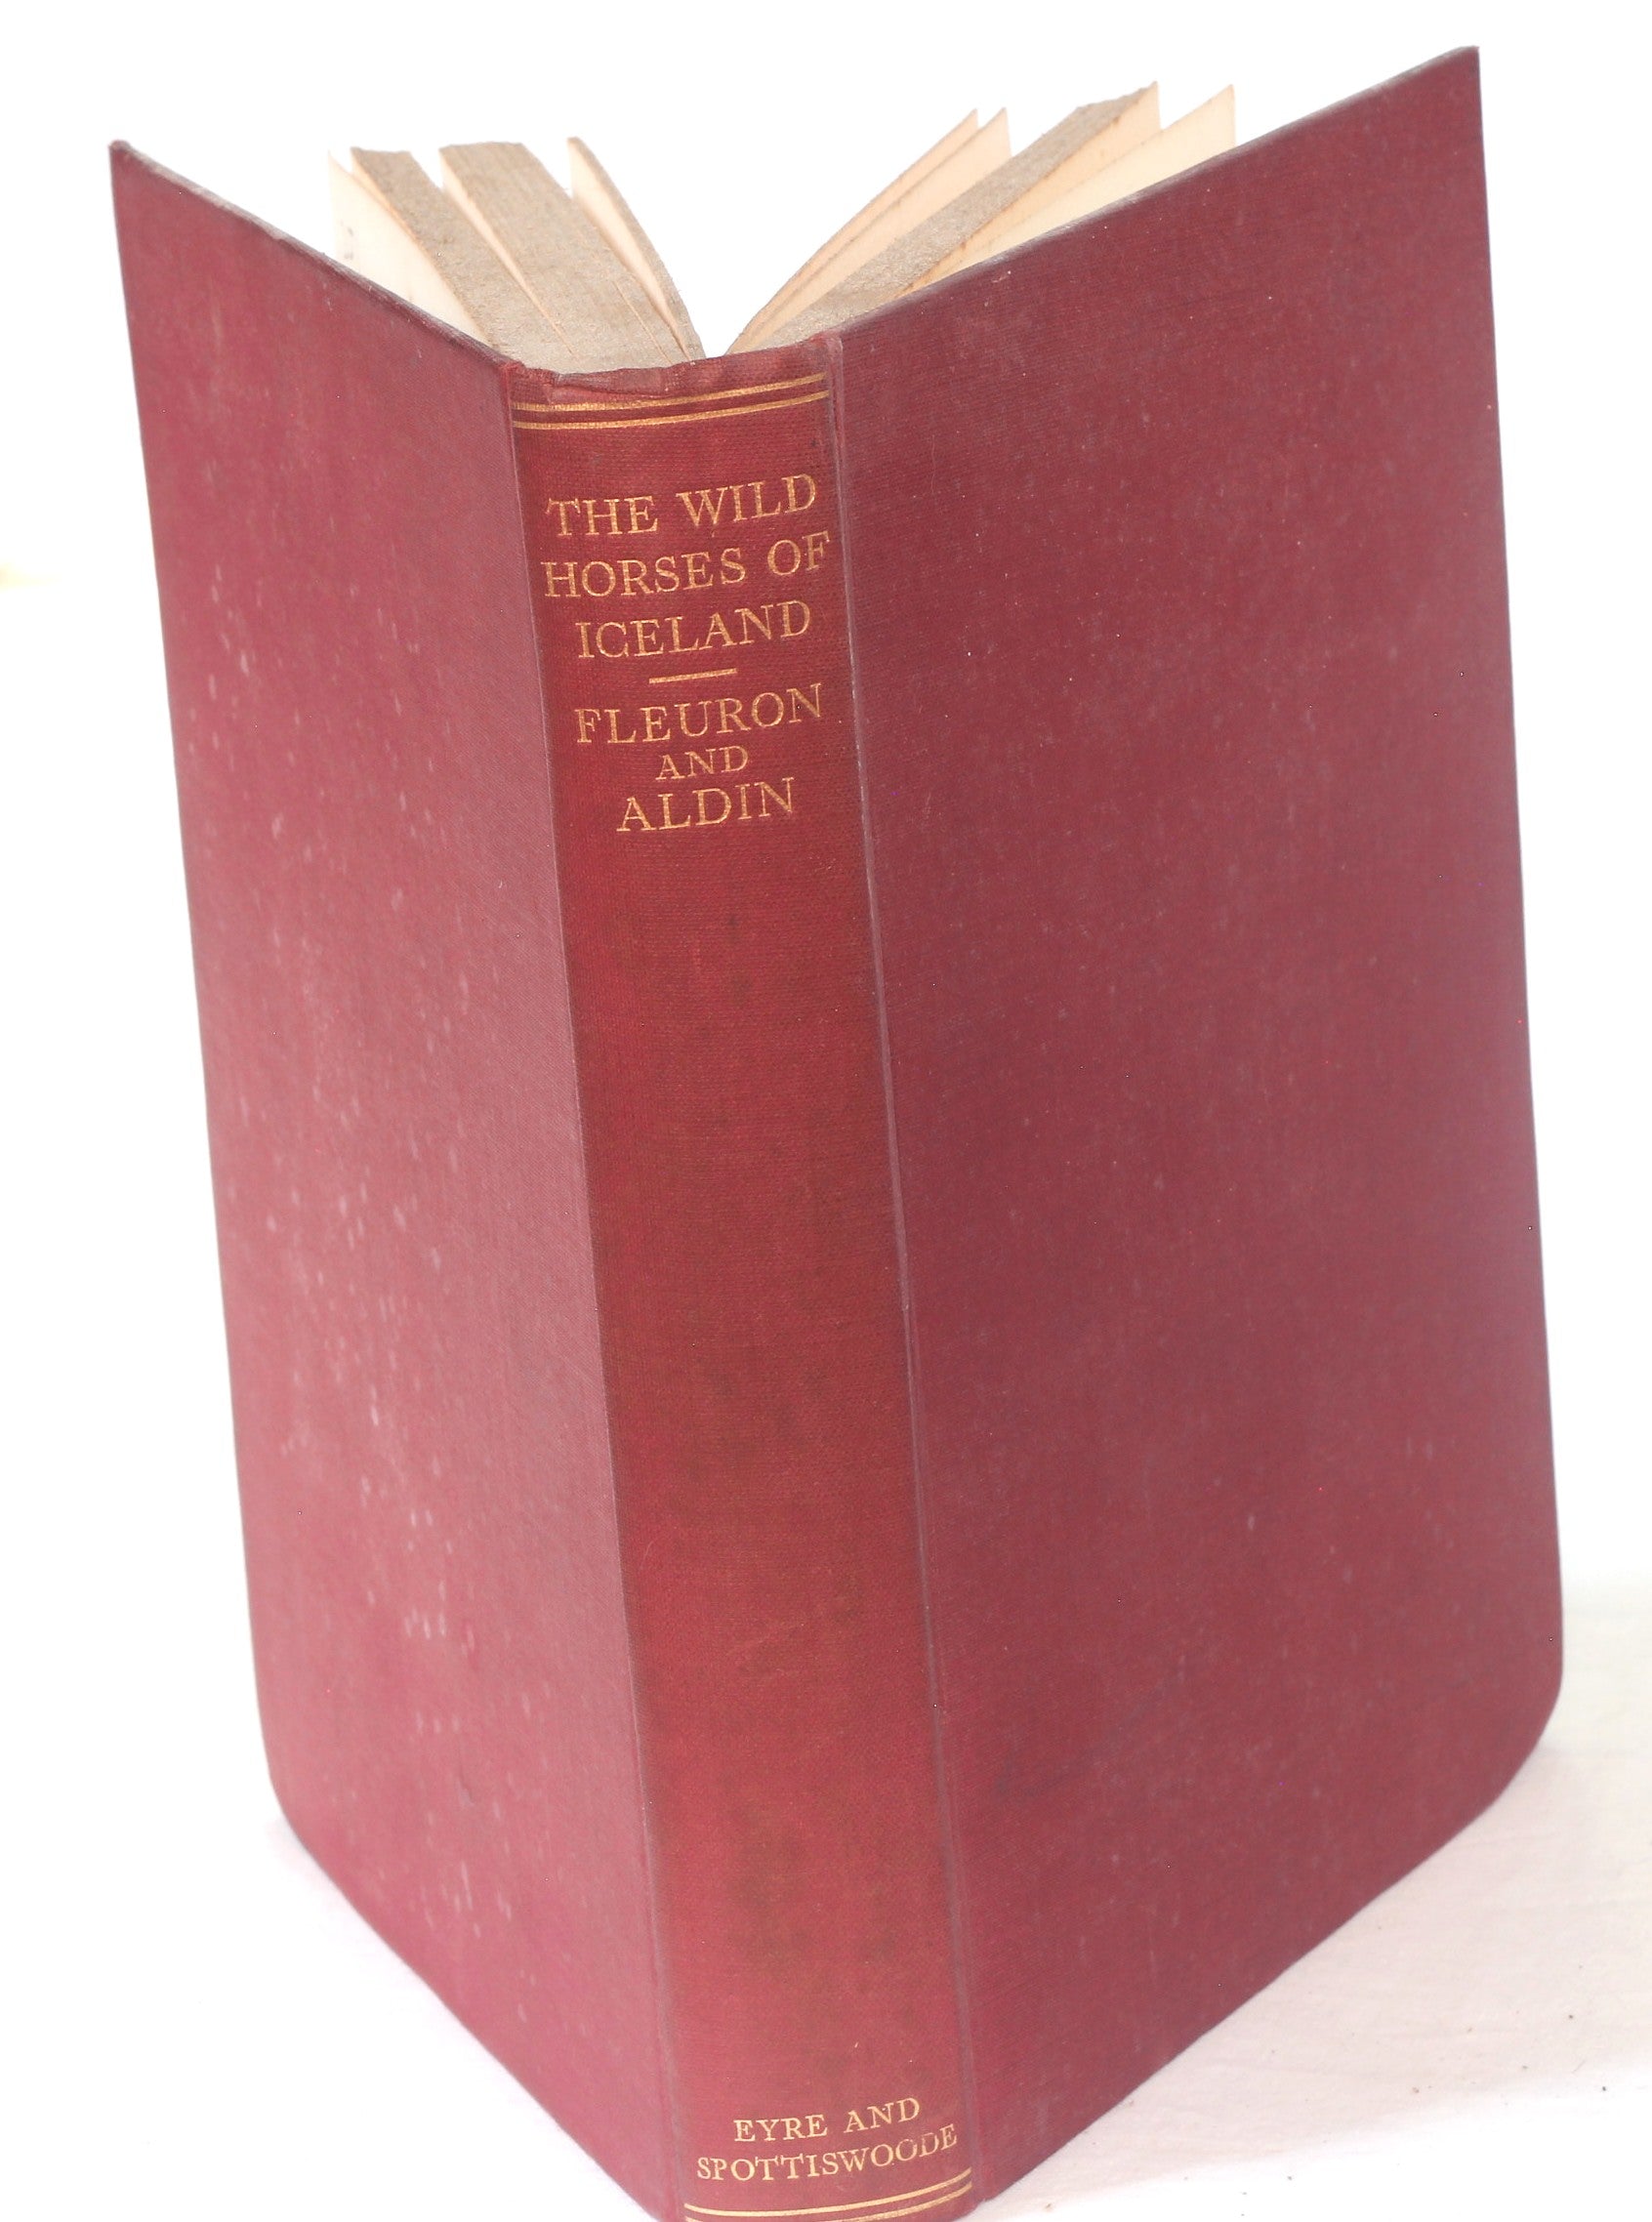 The Wild Horses of Iceland by Fleuron, illus. Cecil Aldin 1933